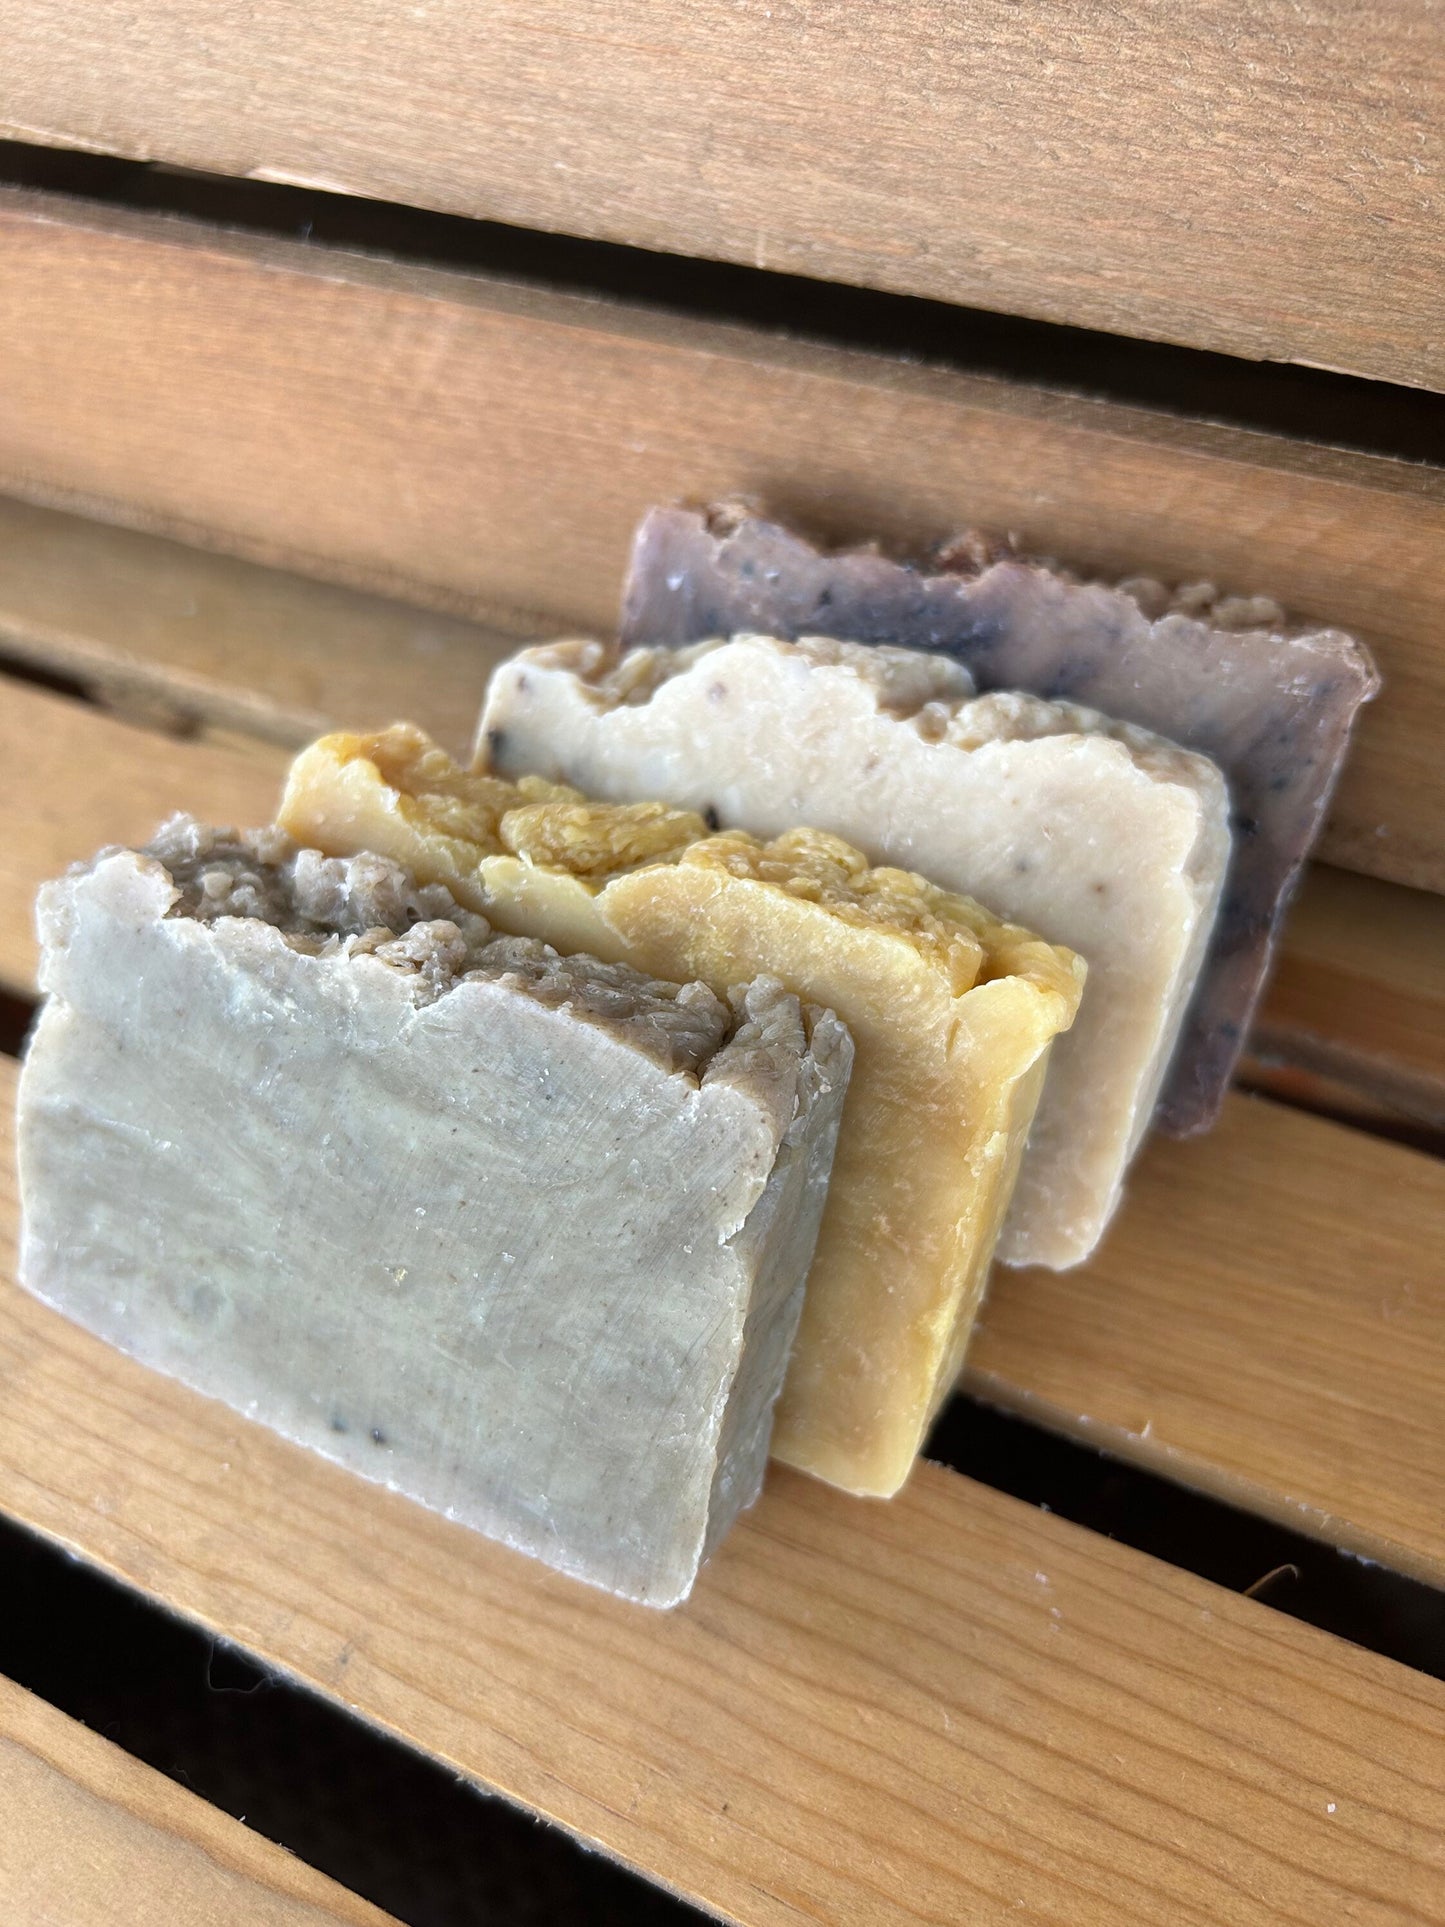 1 lb Soap Bundle - Bulk Soap Bars - Beeswax Soap - Handmade Natural Soap - Palm Free Soap